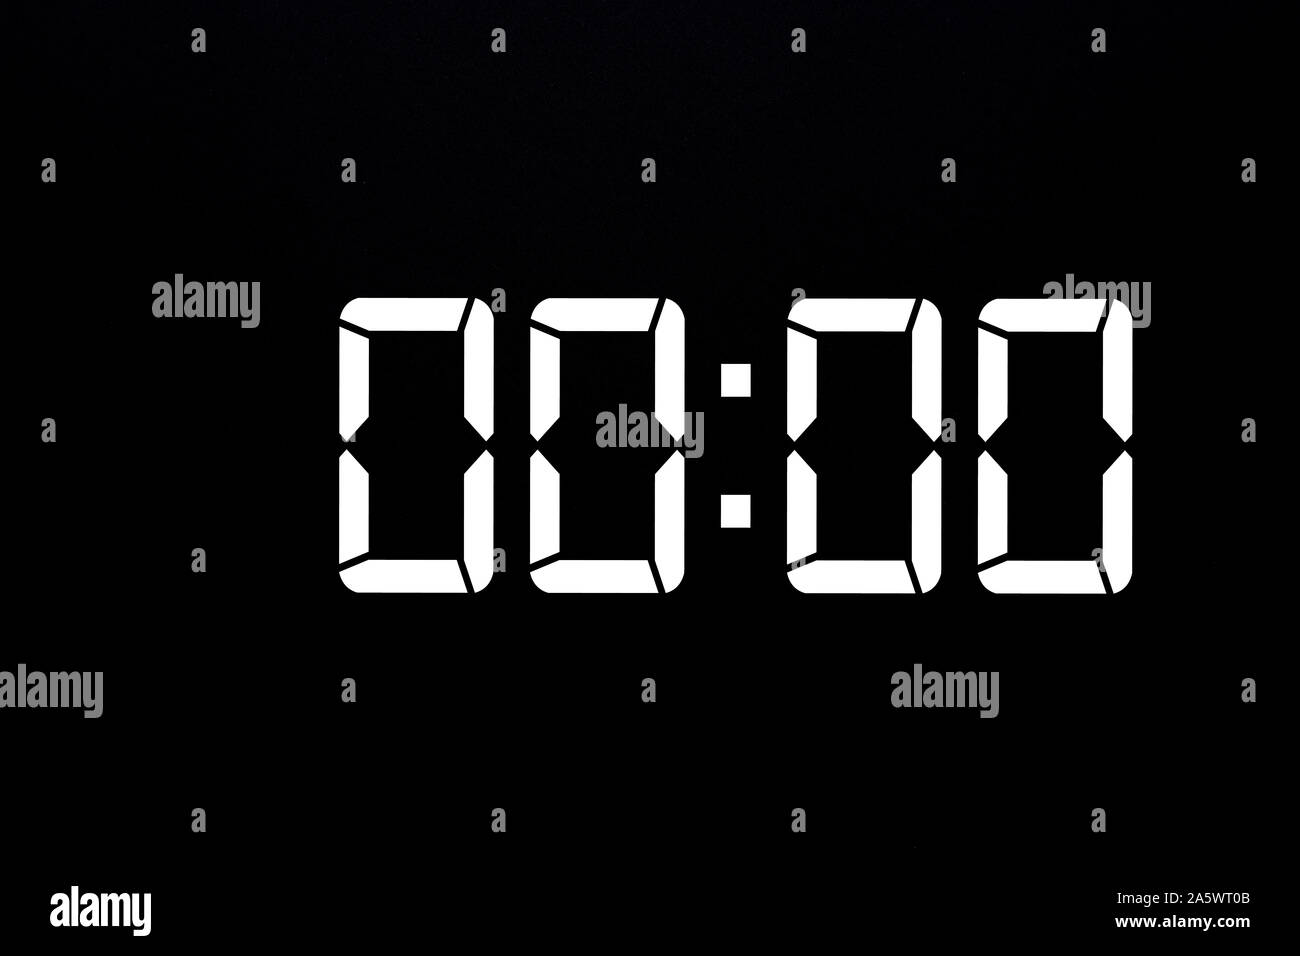 Showing time 00:00 on white led digital clock isolated black background Stock Photo